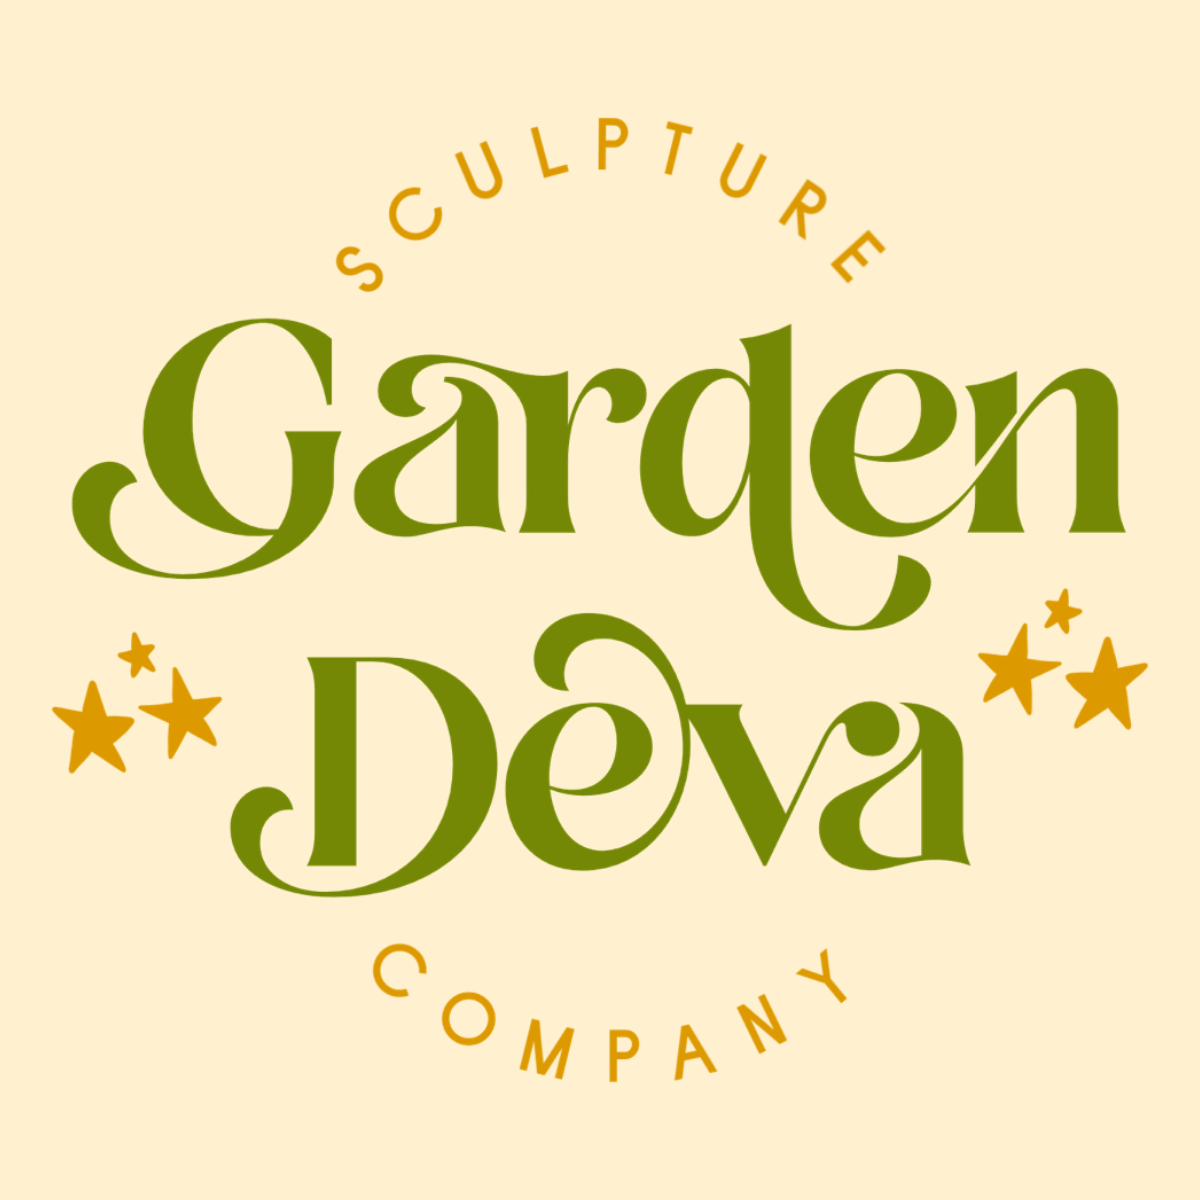 Create-Your-Own Windchime Kit - Garden Deva